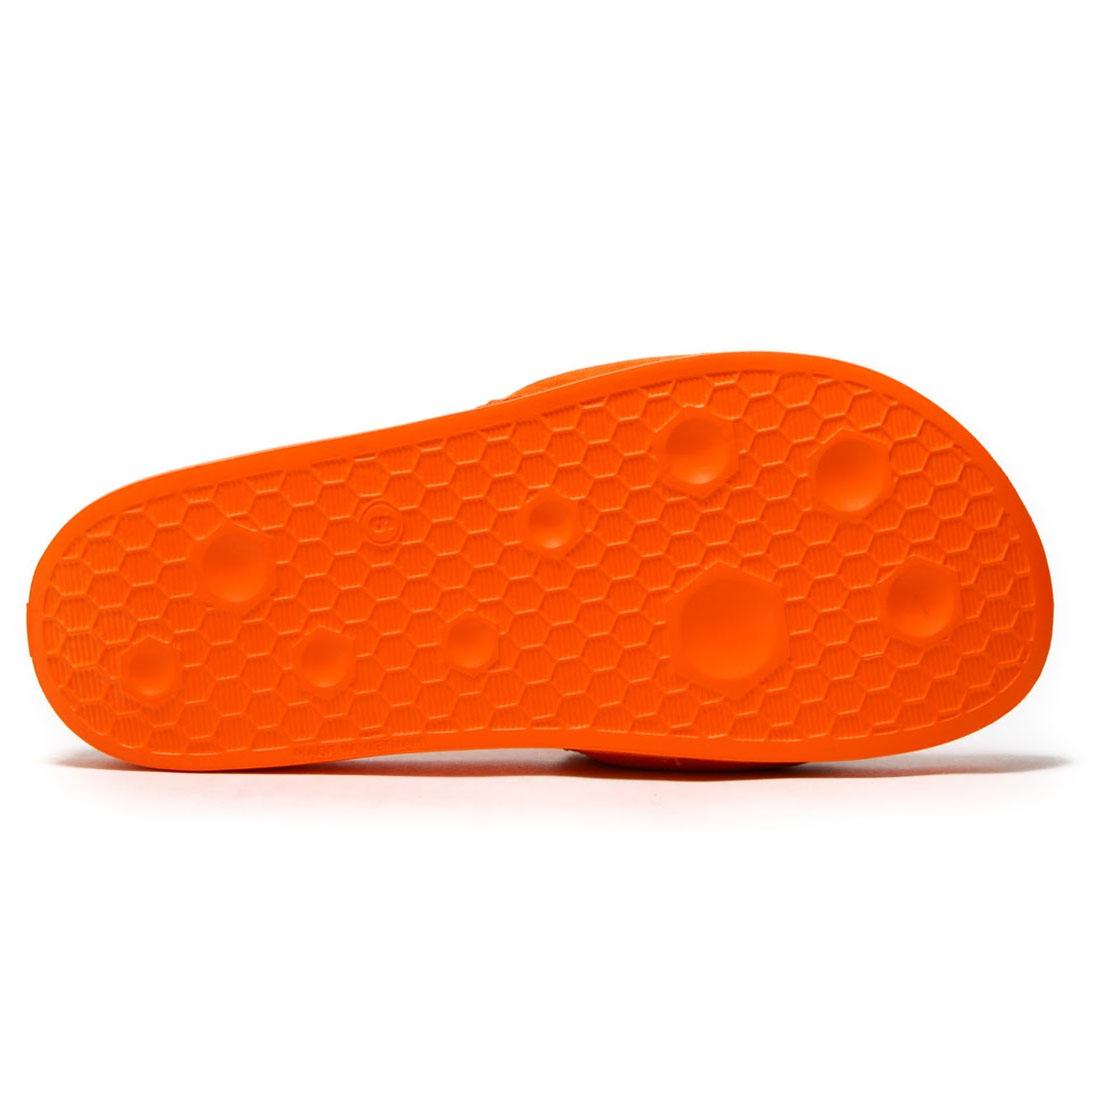 orange puma slides